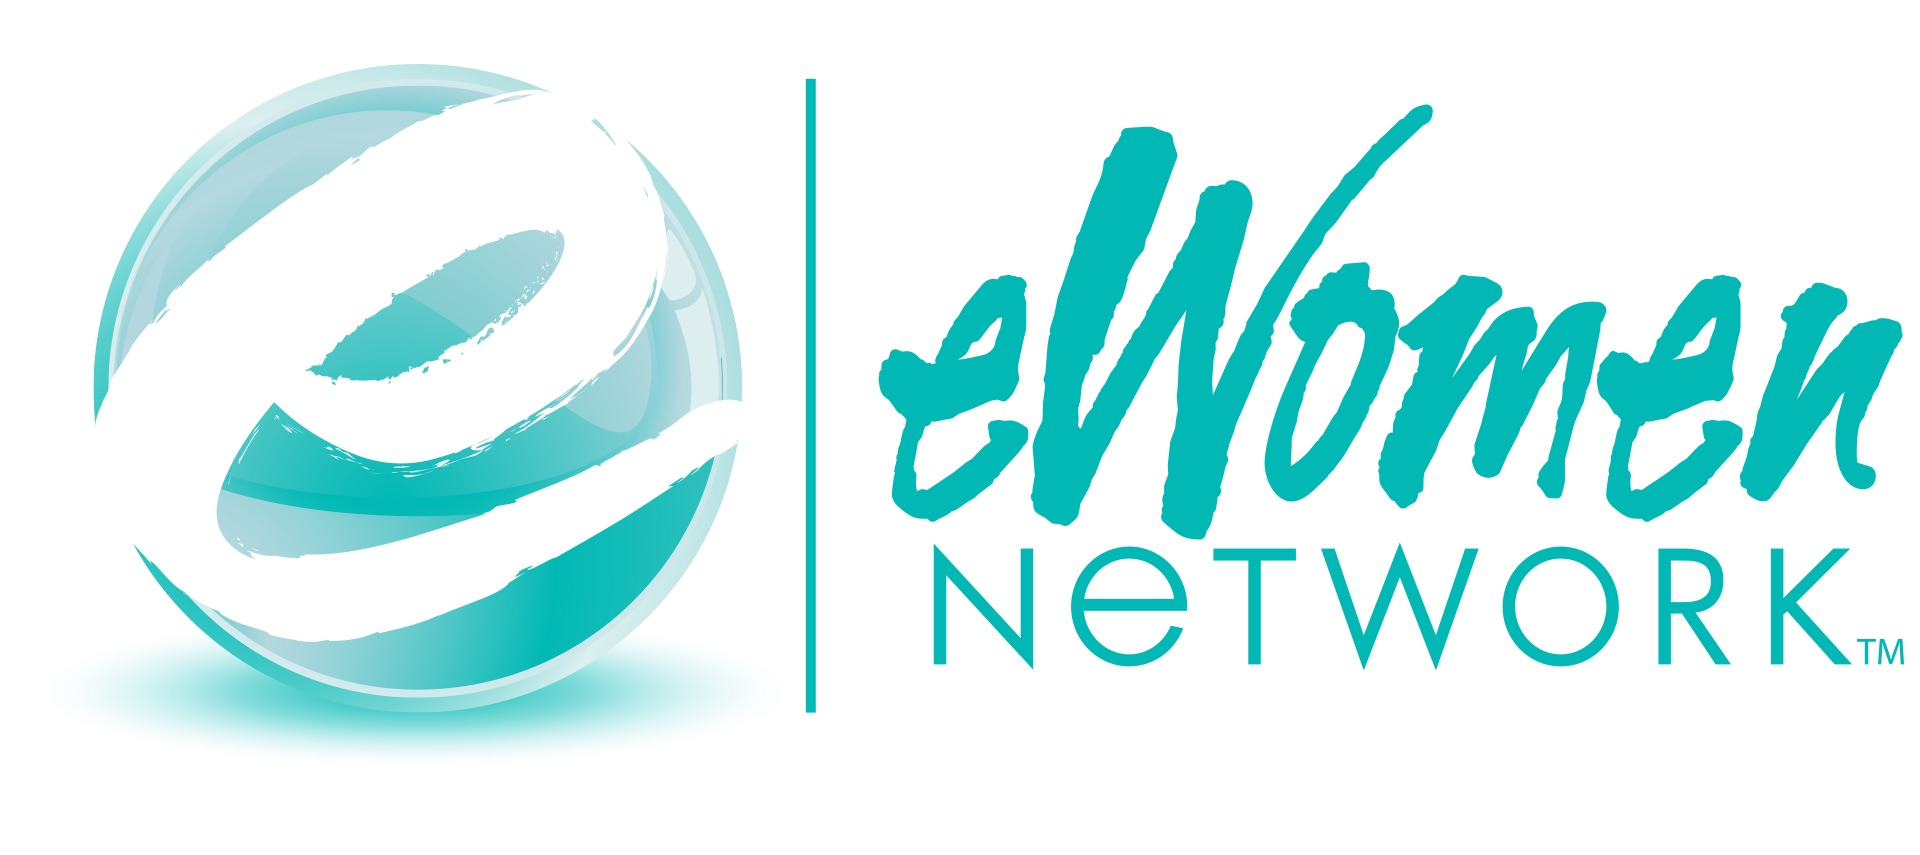 EWomen Network logo